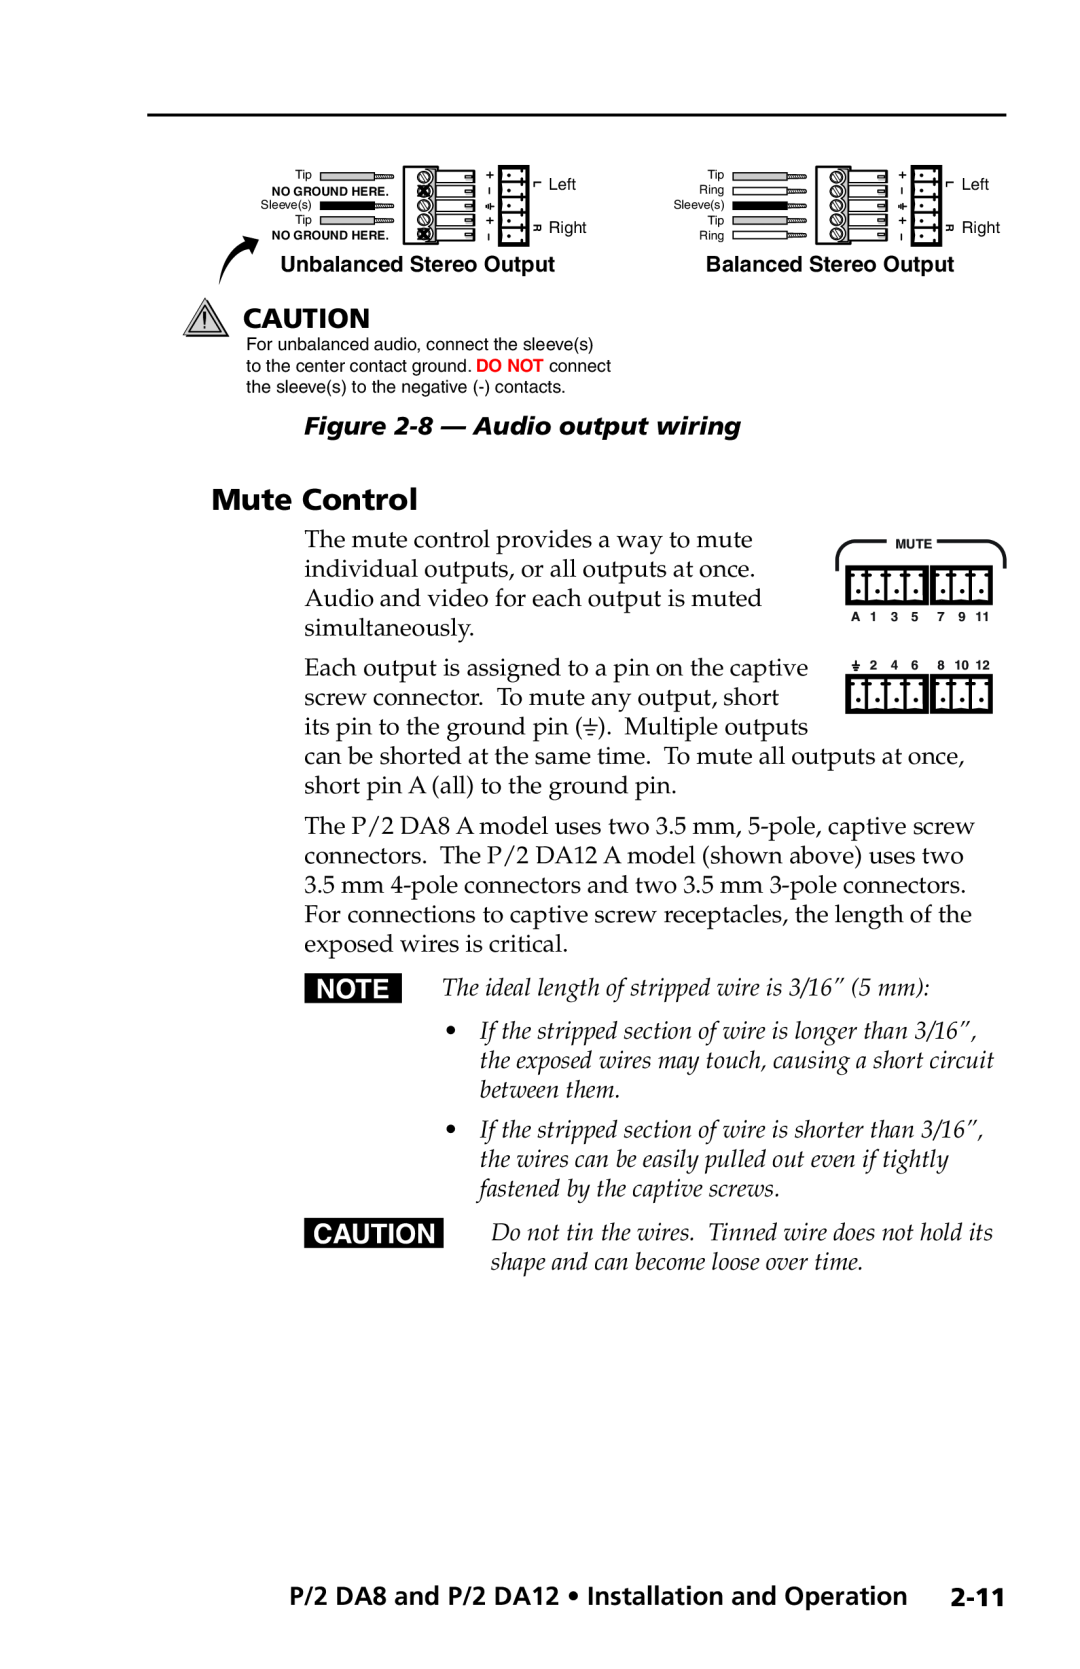 Extron electronic P/2 DA12 Series Mute Control, 8- Audio output wiring, P/2 DA8 and P/2 DA12 Installation and Operation 